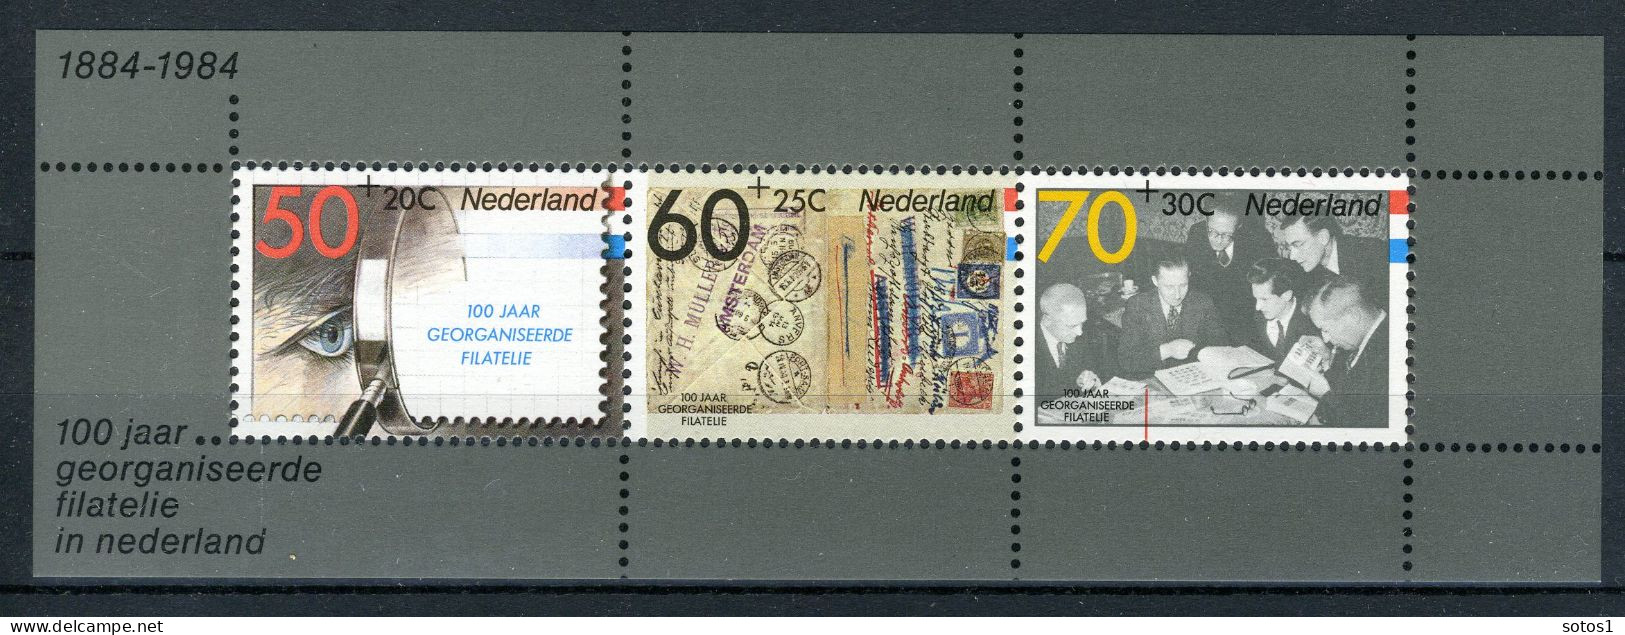 NEDERLAND 1313 MNH Blok 1984 - Filacento -3 - Blocs